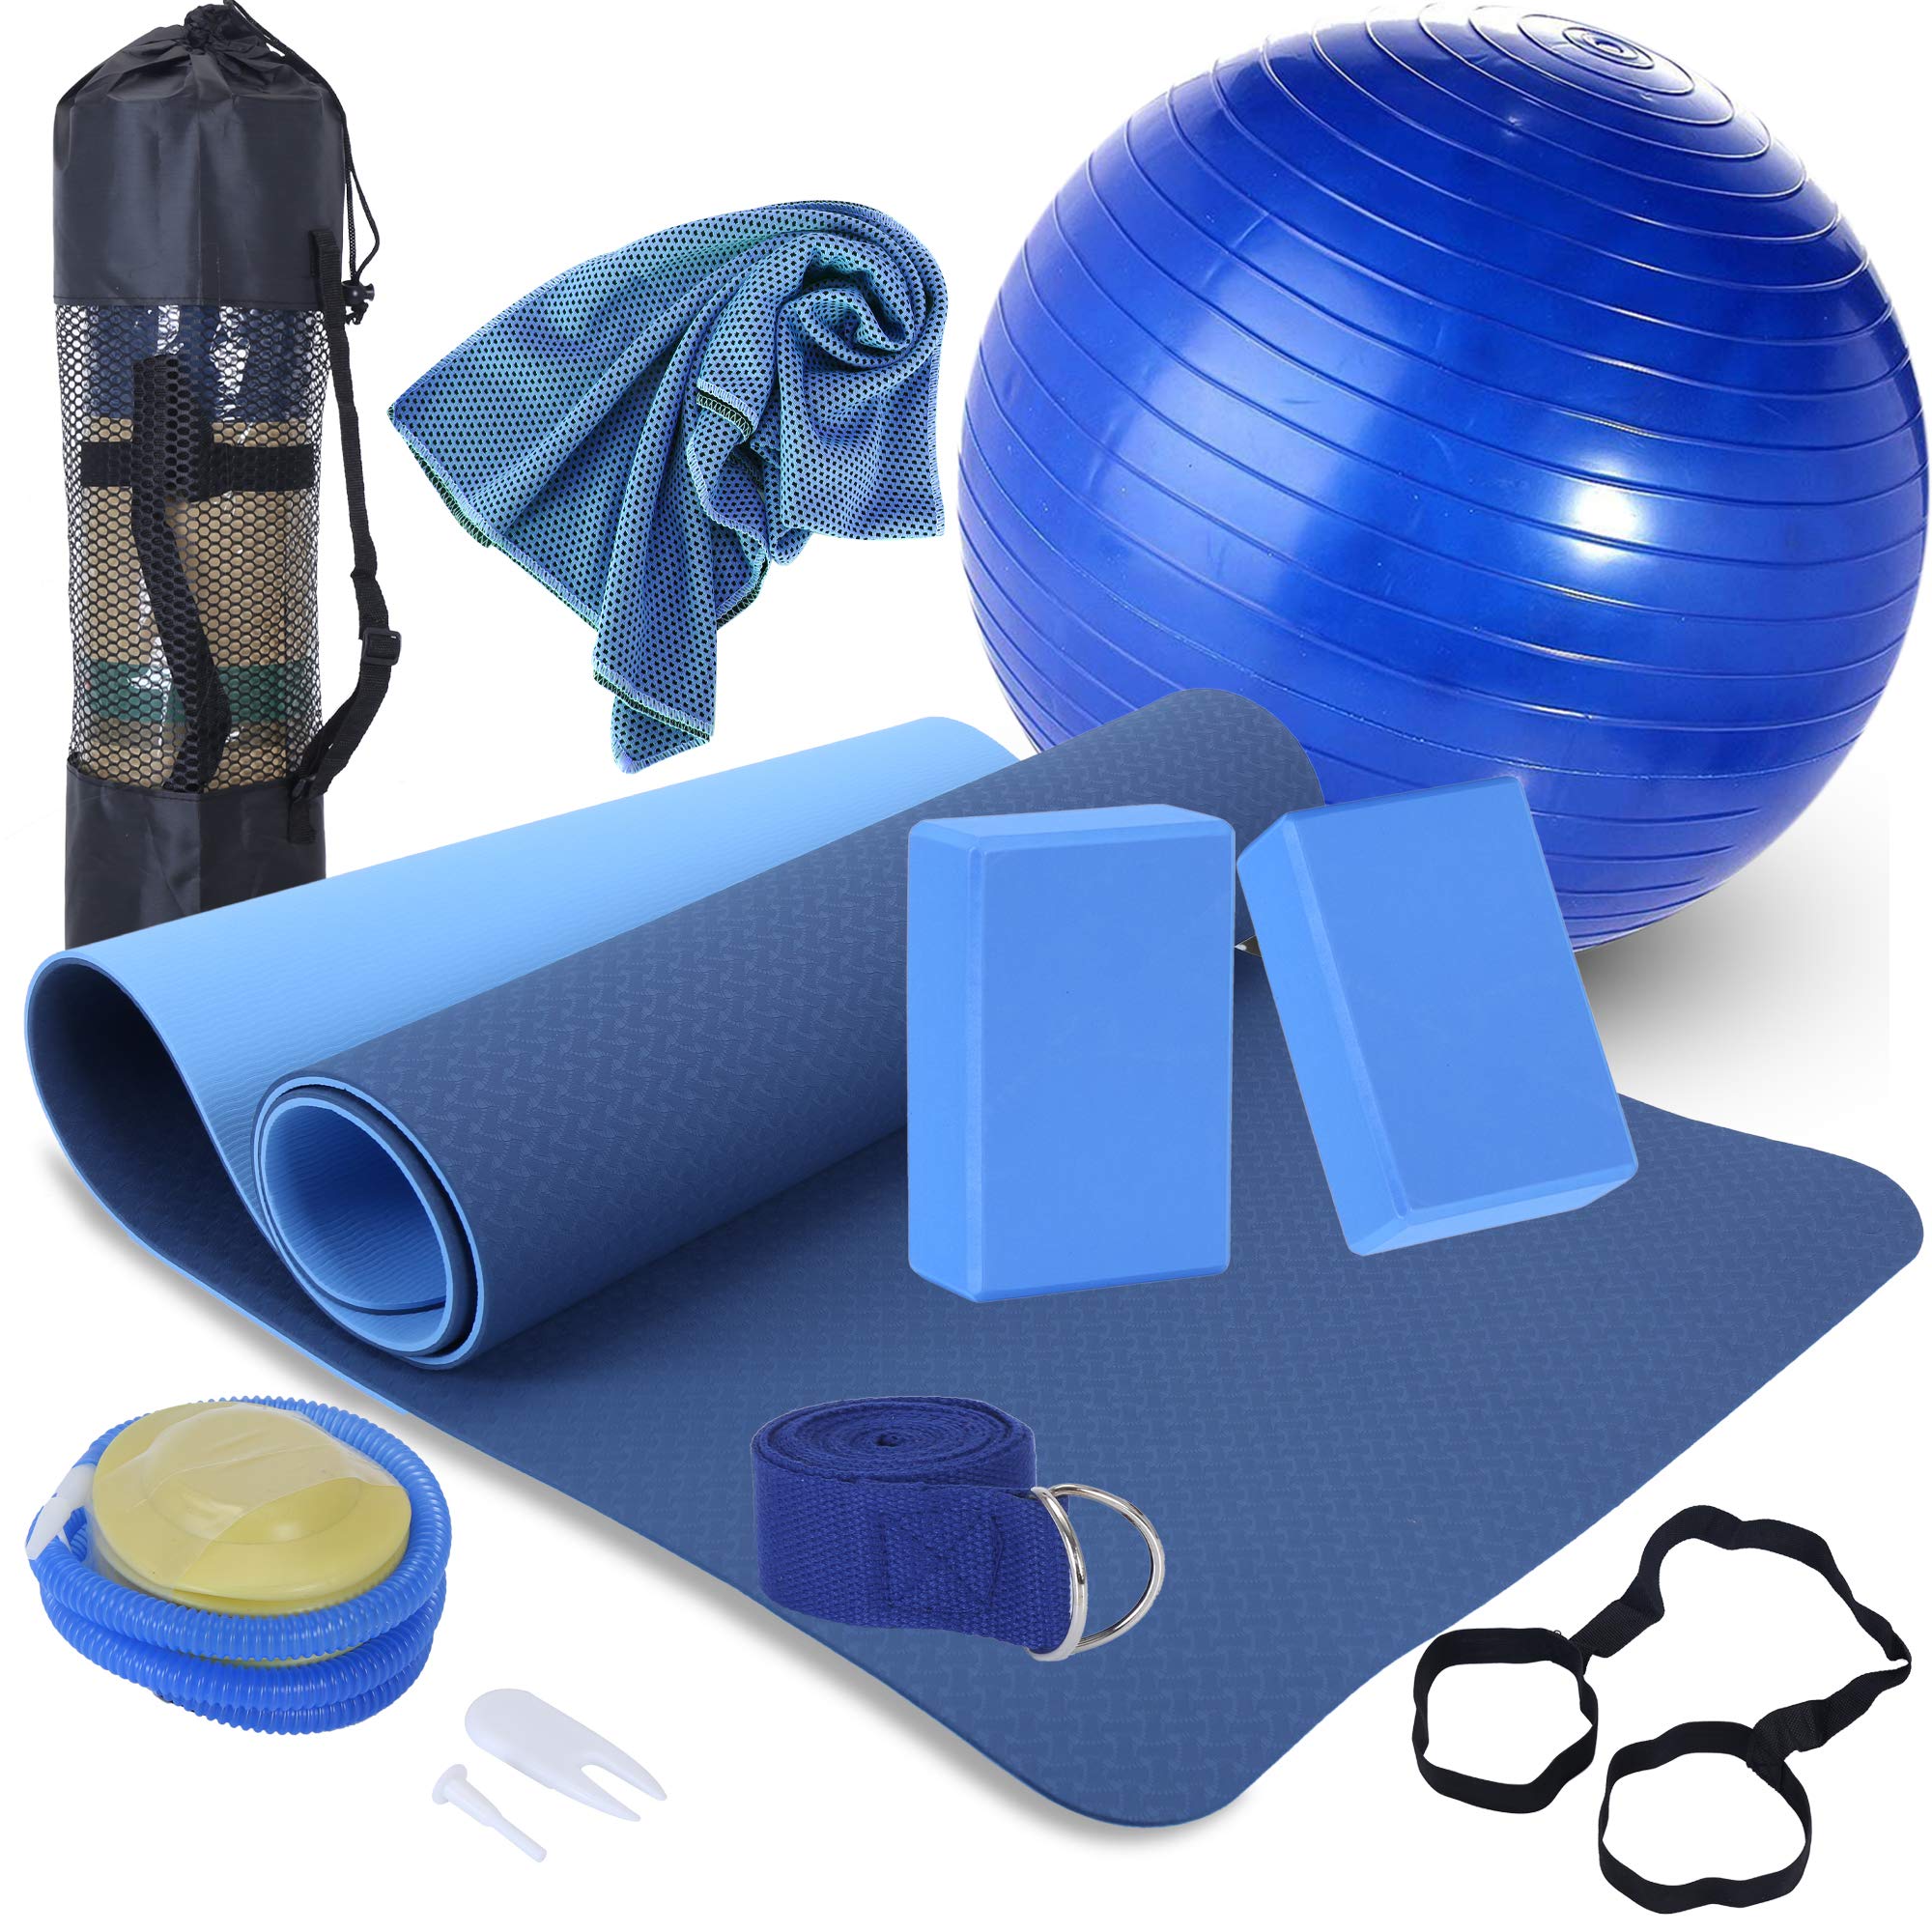 Beginners Yoga Starter Kit Set - 6mm Thick Non-Slip Exercise Yoga Mat 2 Yoga Blocks Yoga Ball Yoga Strap with Carrying St